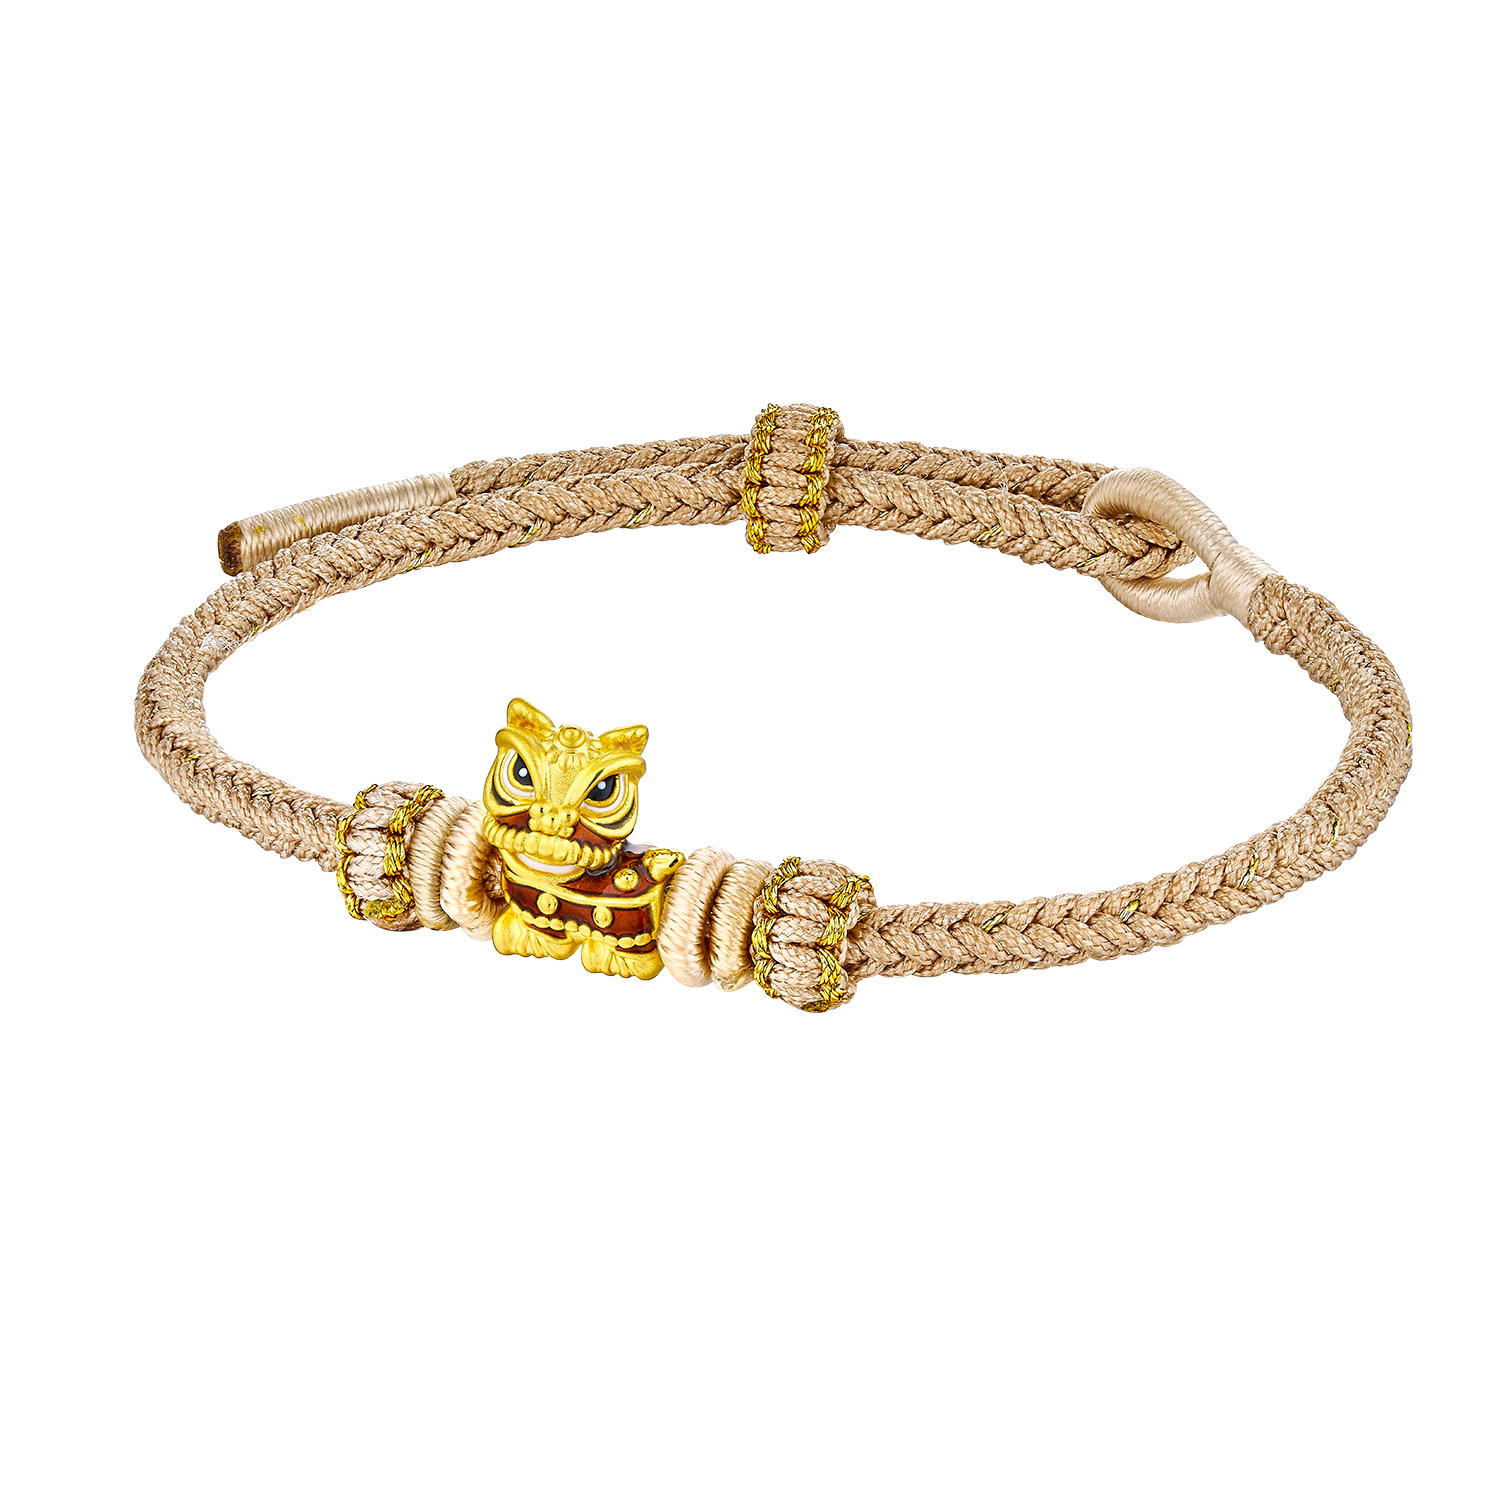 Gold Plated Lion Bracelet - 1 Gram Fashion Jewelry at Rs 4840.00 | गोल्ड  प्लेटेड ब्रेसलेट - Soni Fashion, Rajkot | ID: 2851900480491